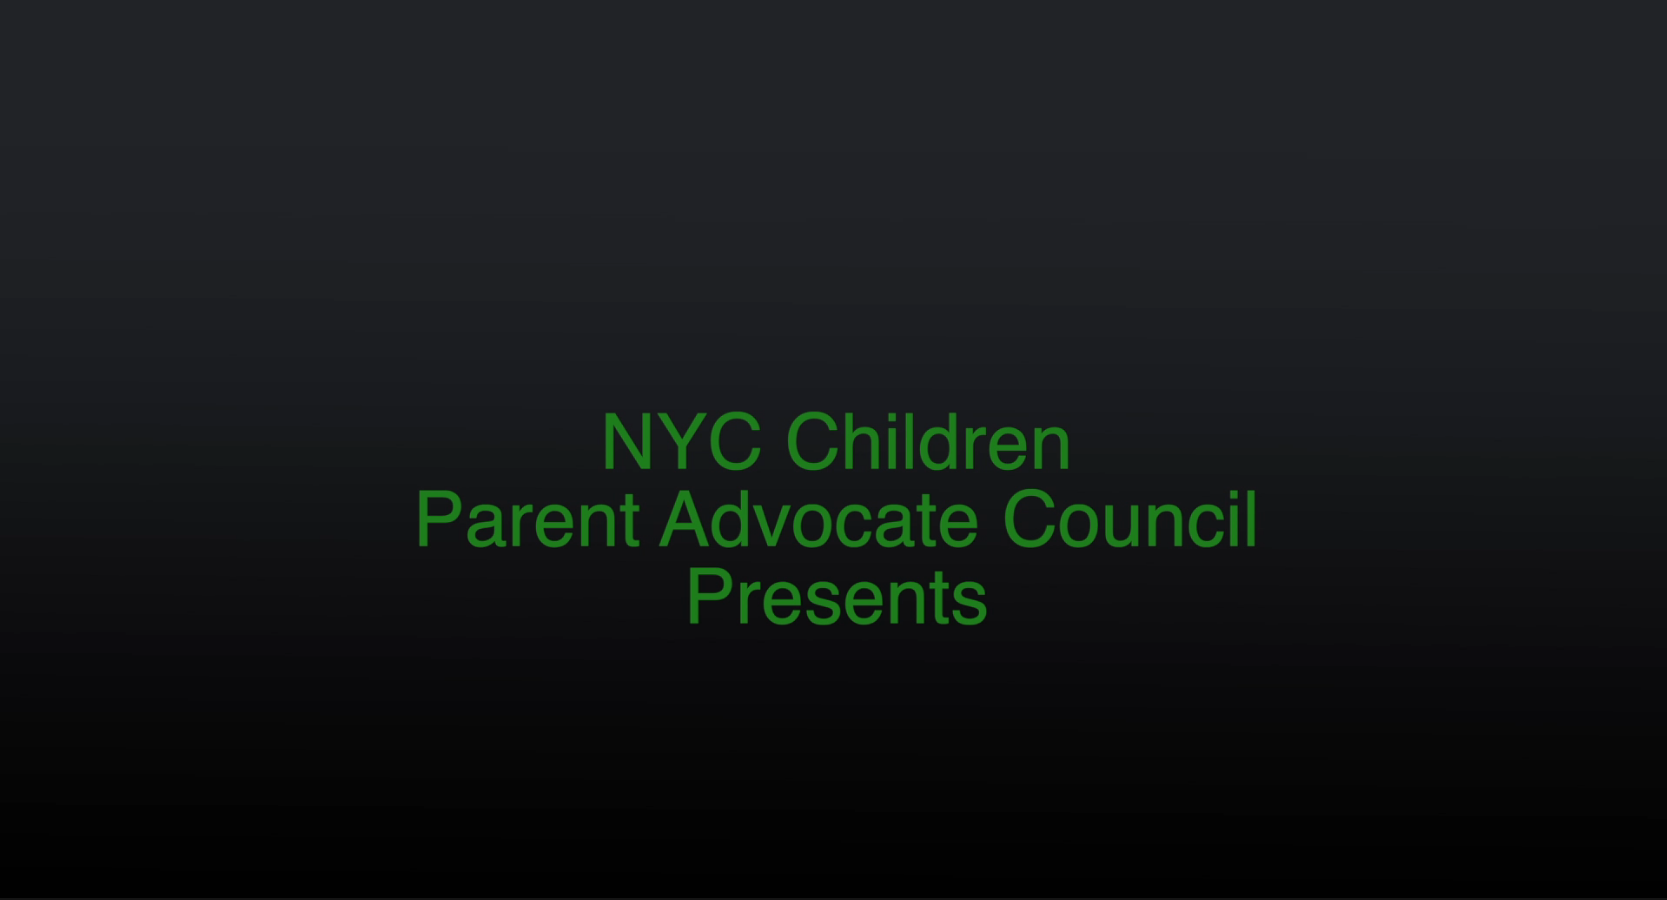 NYC Children Parent Advocate Council Presents Black Background Green Text